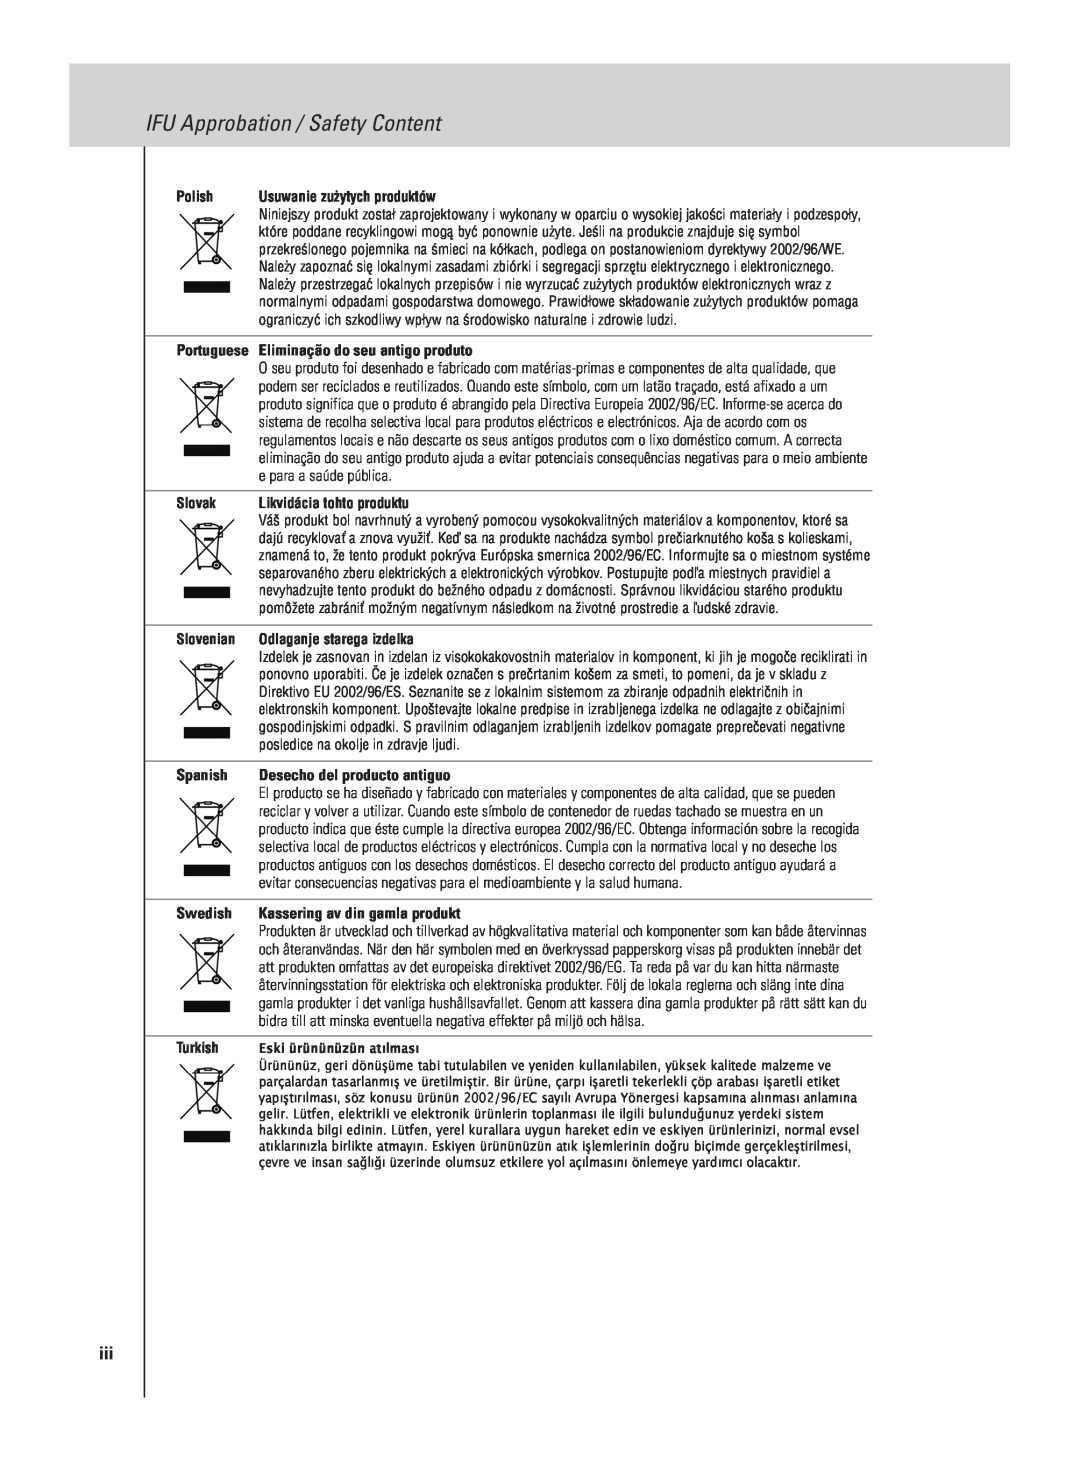 Marantz RX9001 manual IFU Approbation / Safety Content 